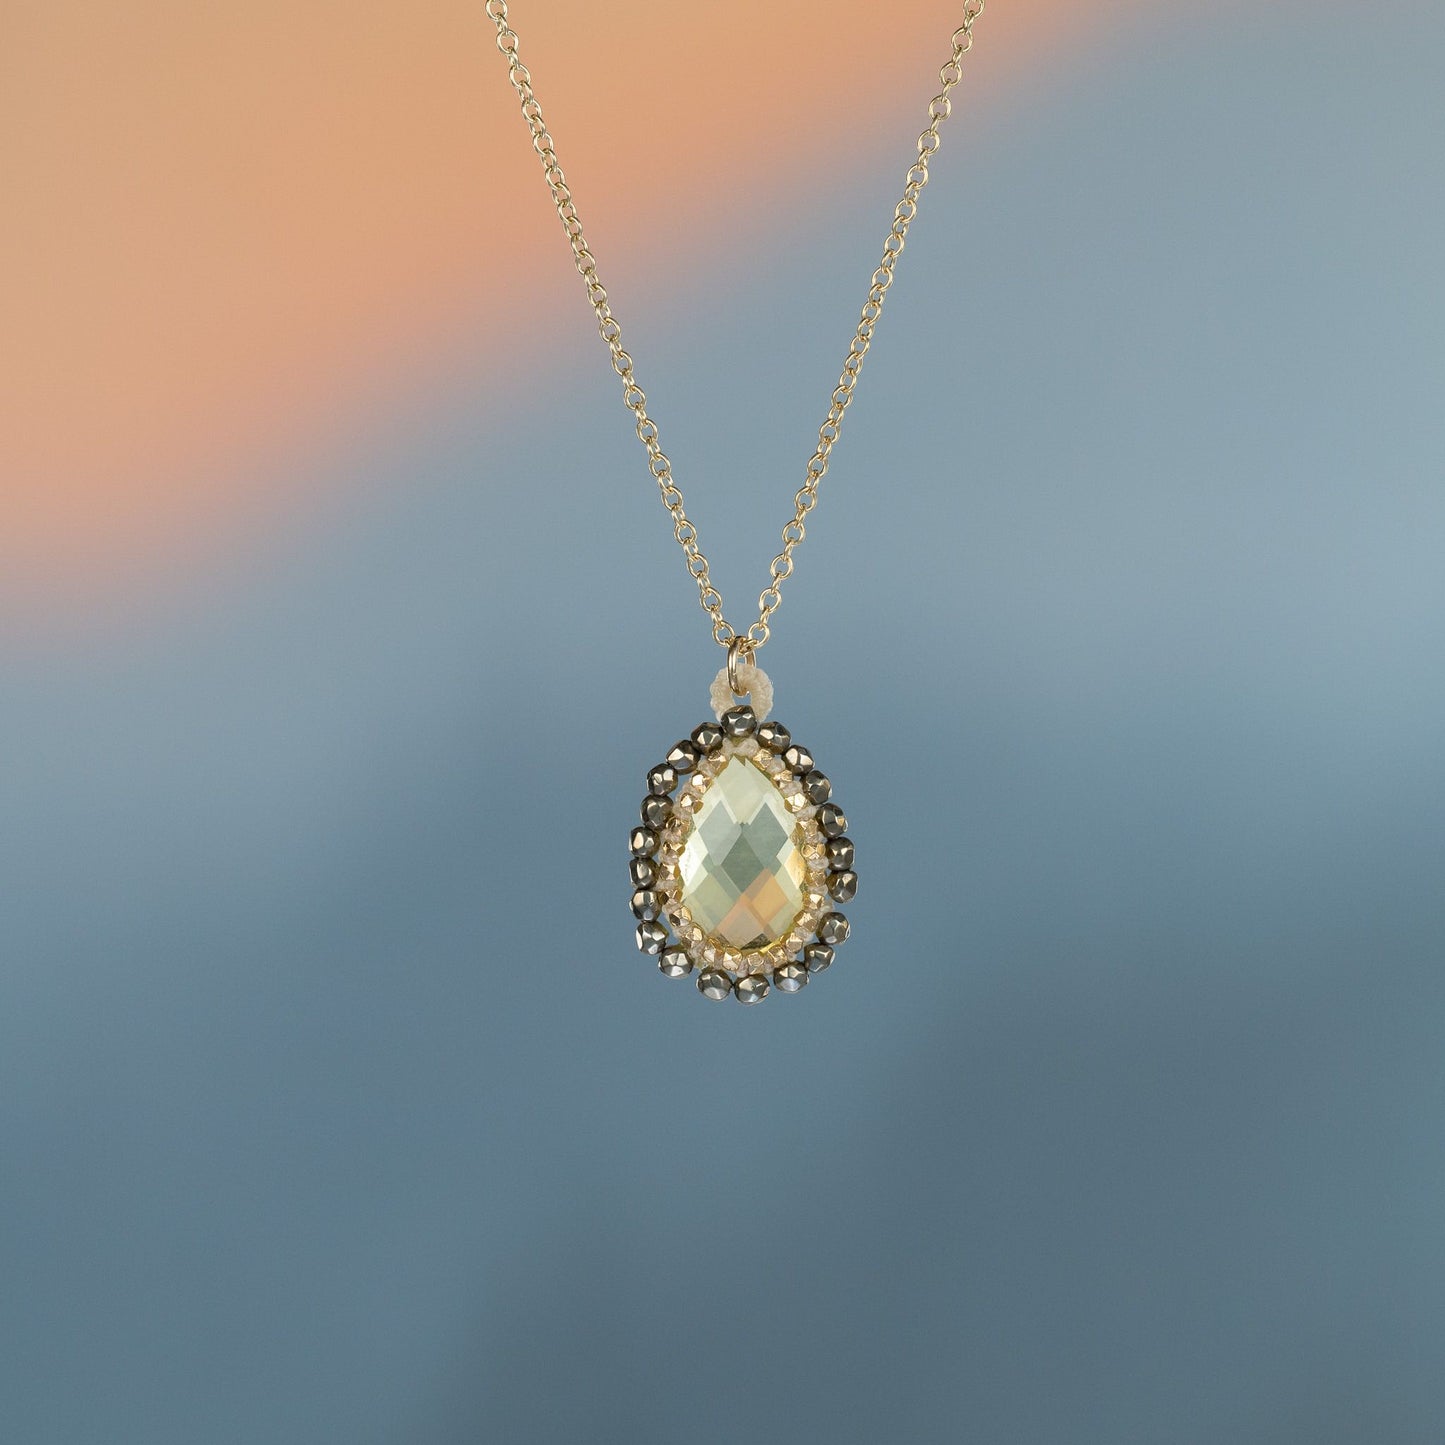 Load image into Gallery viewer, Danielle Welmond Caged Lemon Quartz Necklace with Pyrite Orbit
